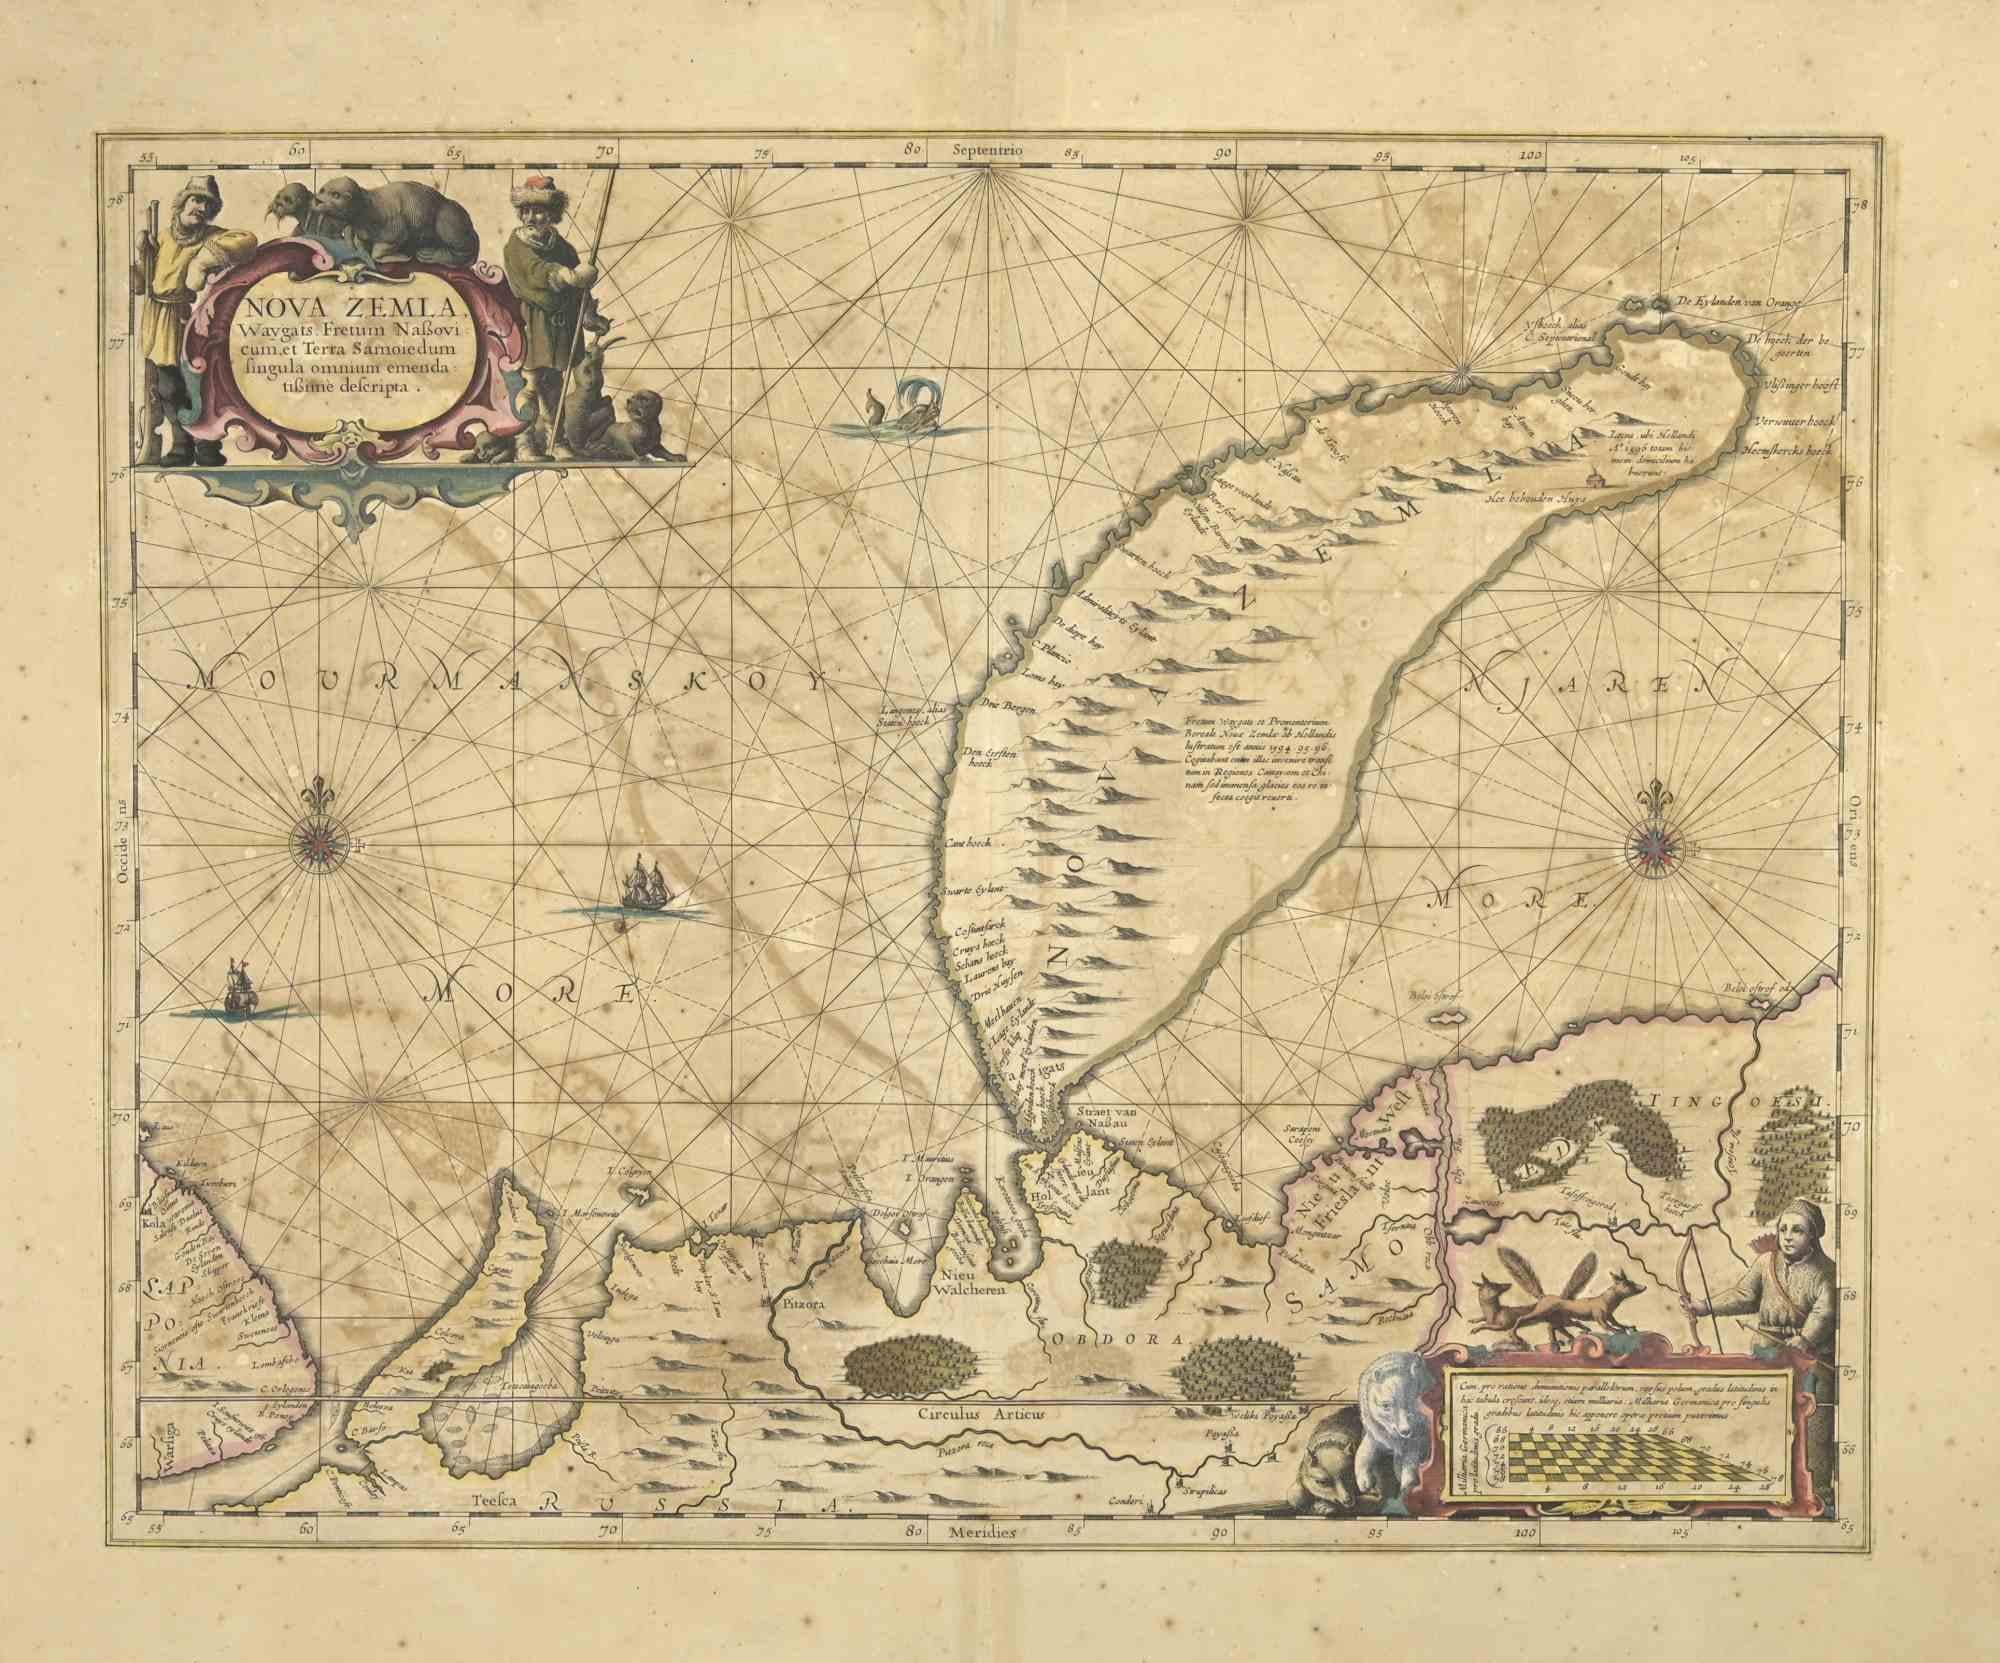 Nova Zemla is an ancient map realized in 1650 by Johannes Janssonius (1588-1664).

Good conditions.

From Atlantis majoris quinta pars, Orbem maritimum [Novus Atlas, volume V: carte marittime]. Amsterdam: Janssonius, 1650. Technique is etching and